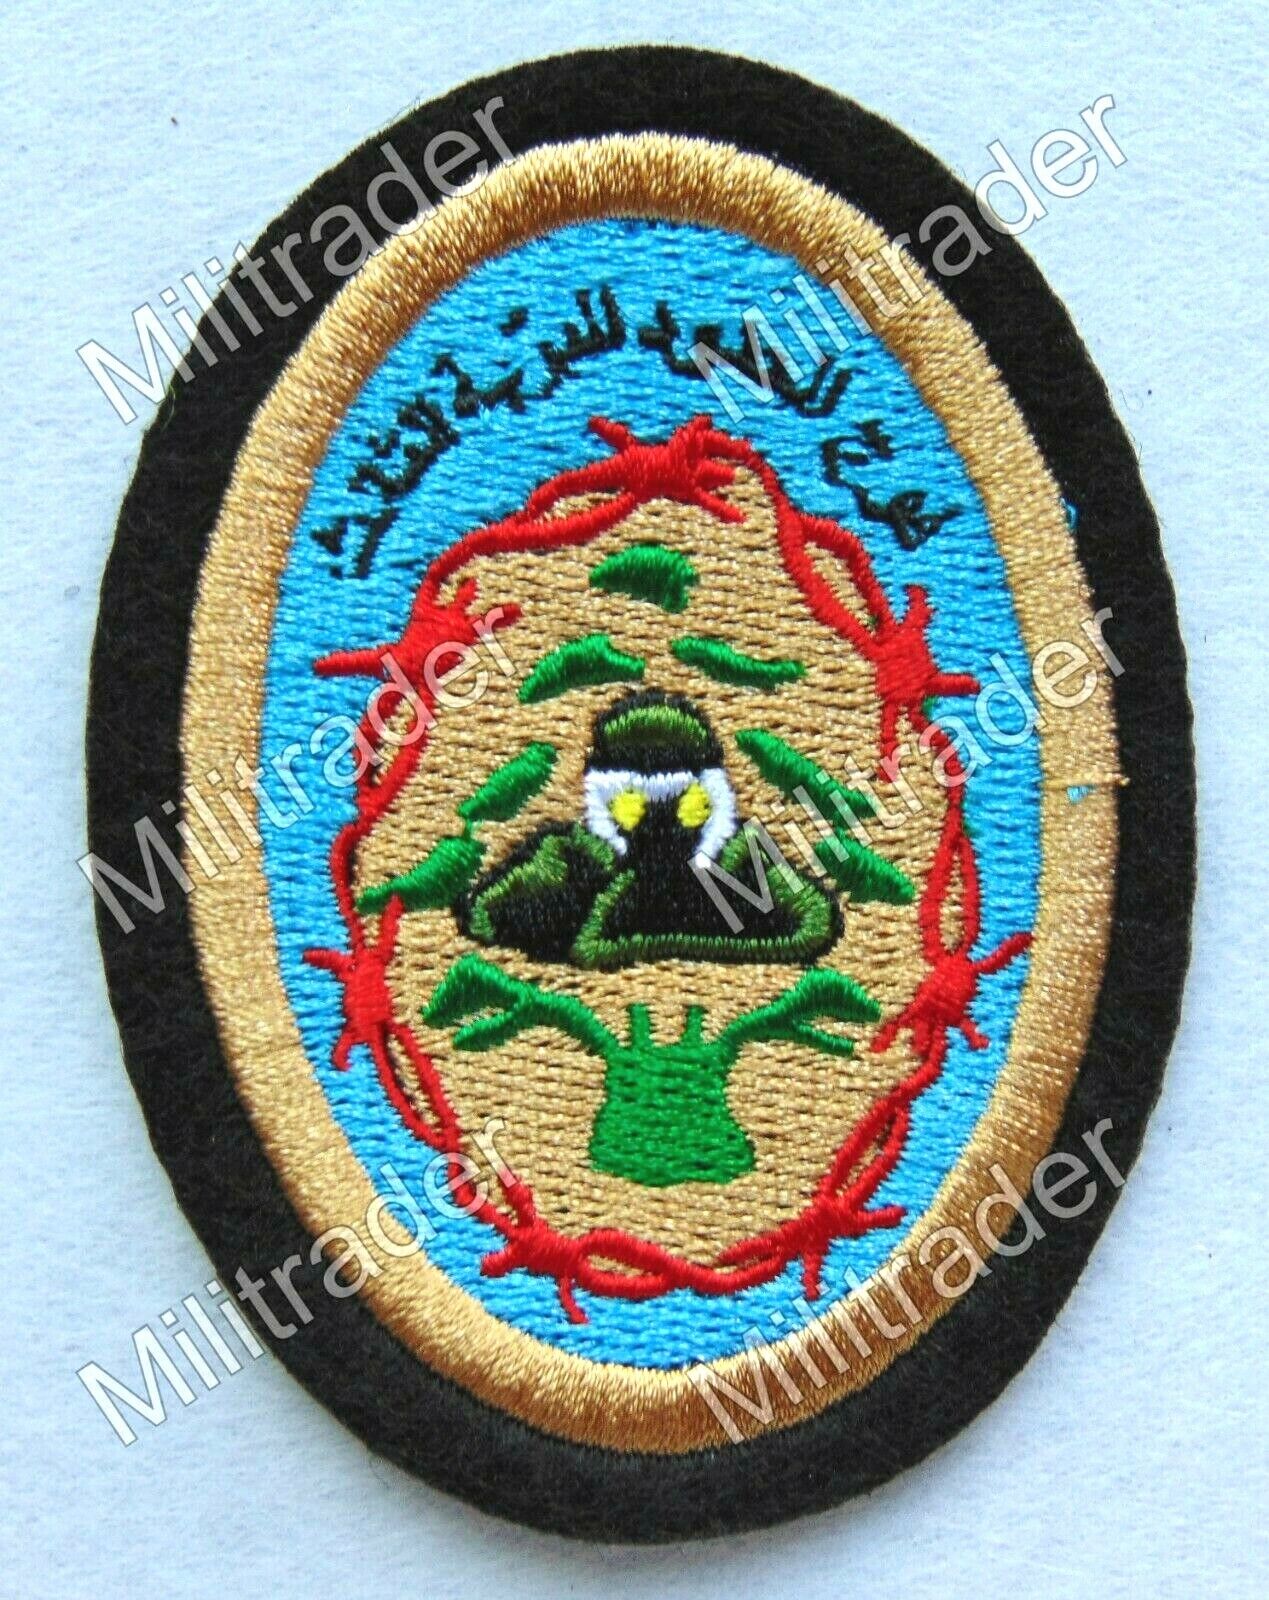 Lebanon Lebanese 3rd Land Border Regiment Patch (Small)